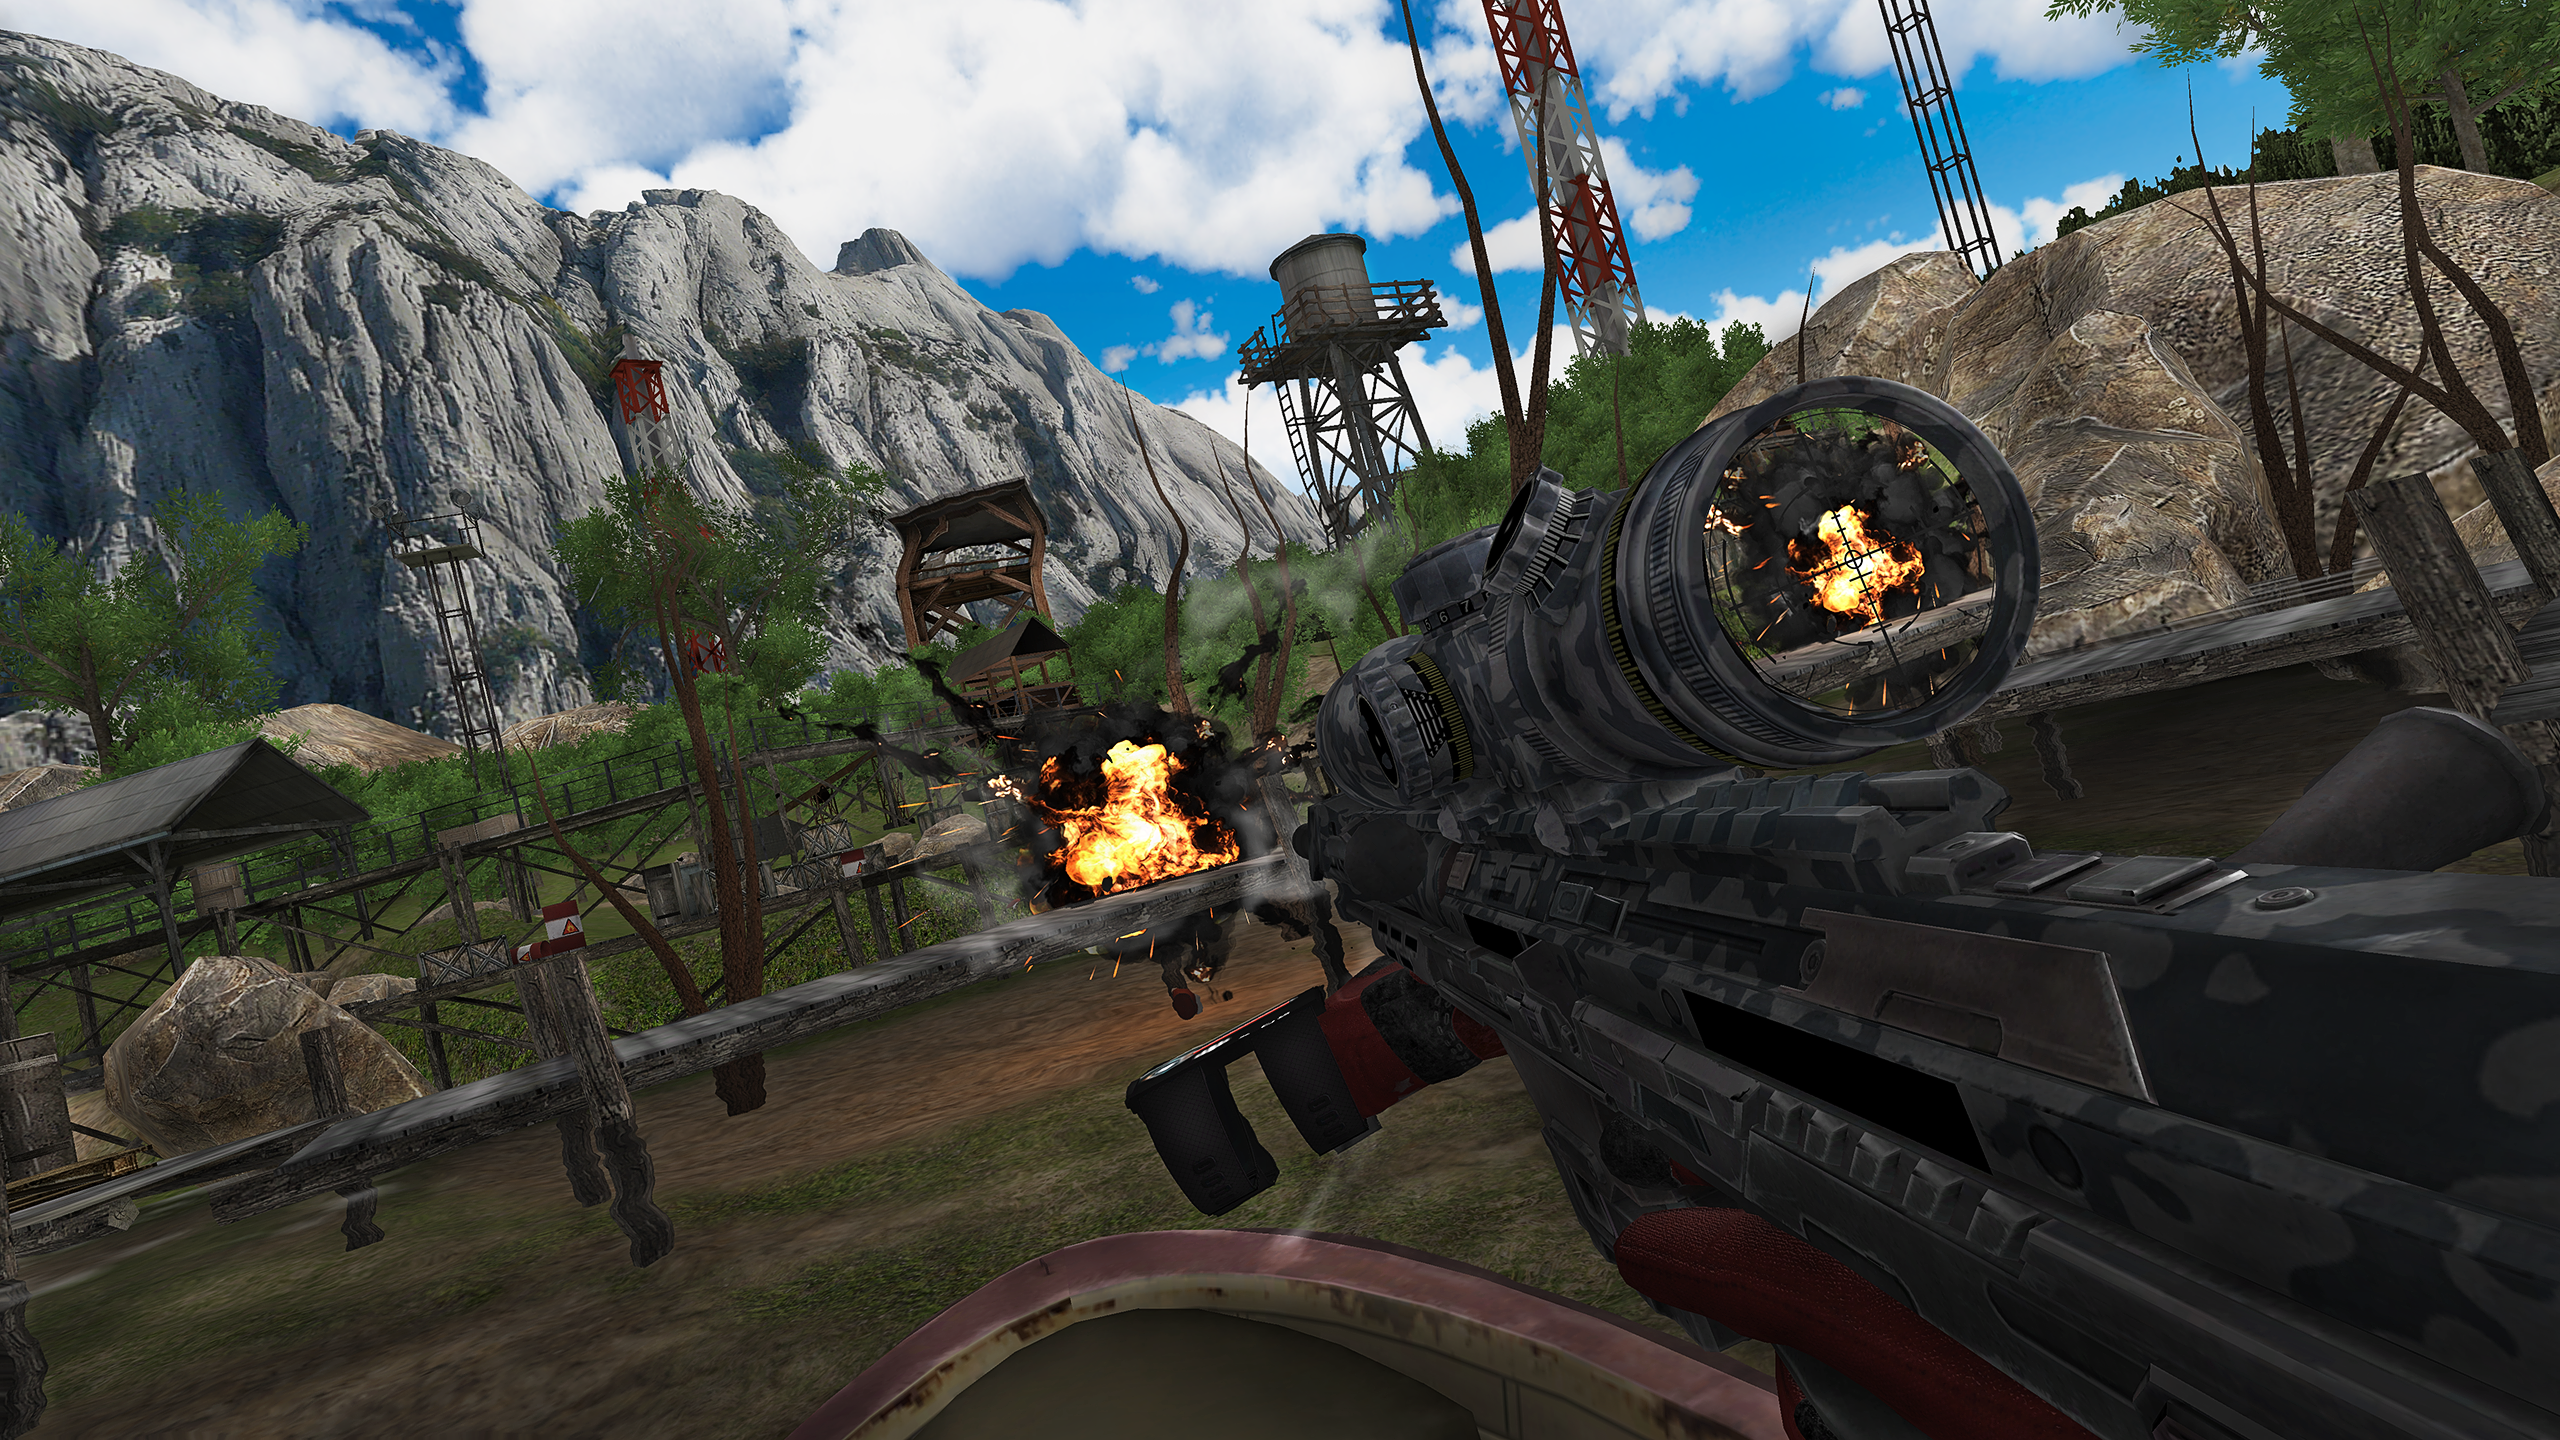 SniperRust VR screenshot 04 - Game Design & Development Strategies For Beginners